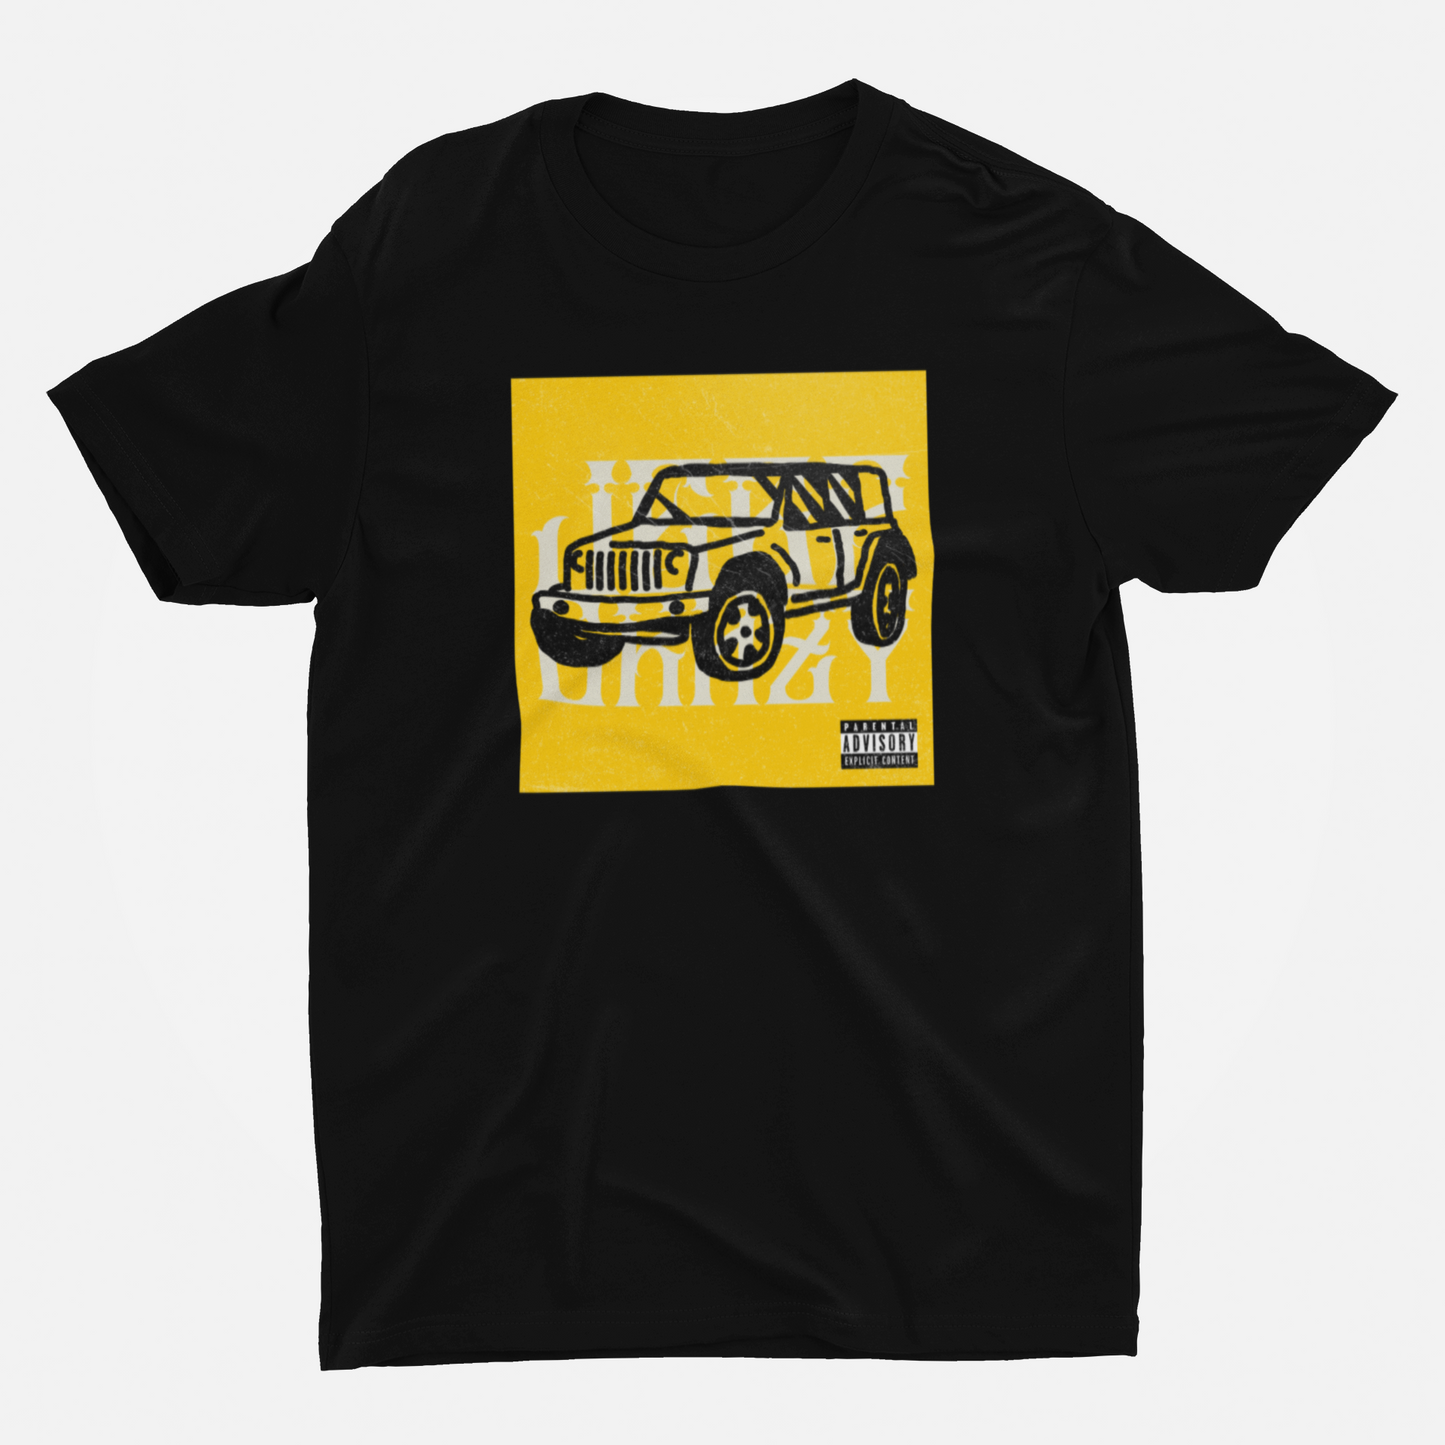 Jeep Crazy Vintage Car Black Round Neck T-Shirt for Men. 